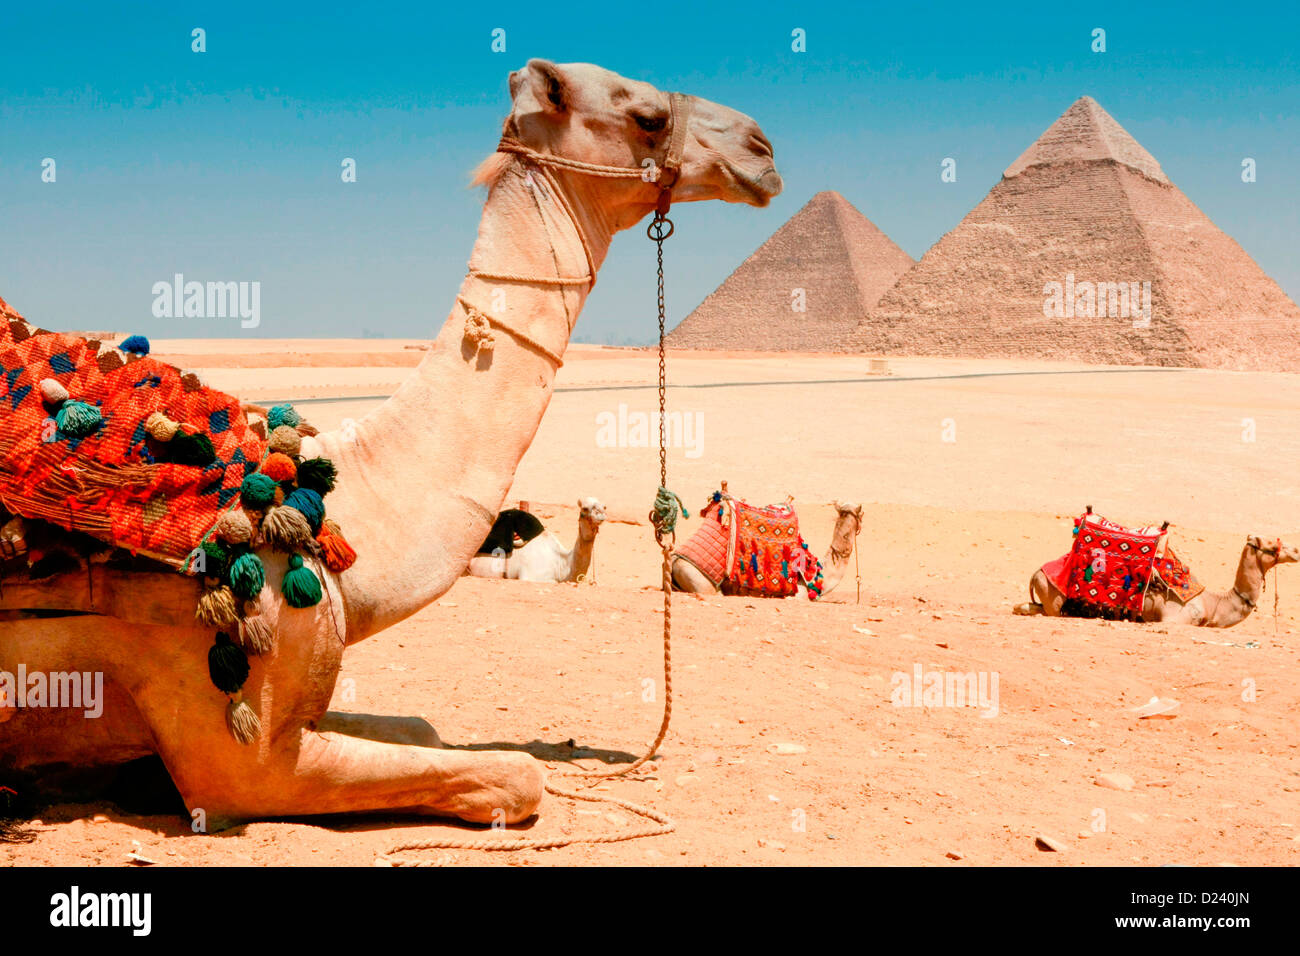 Kamele bei den Pyramiden von Gizeh nahe Kairo, Ägypten. Stockfoto